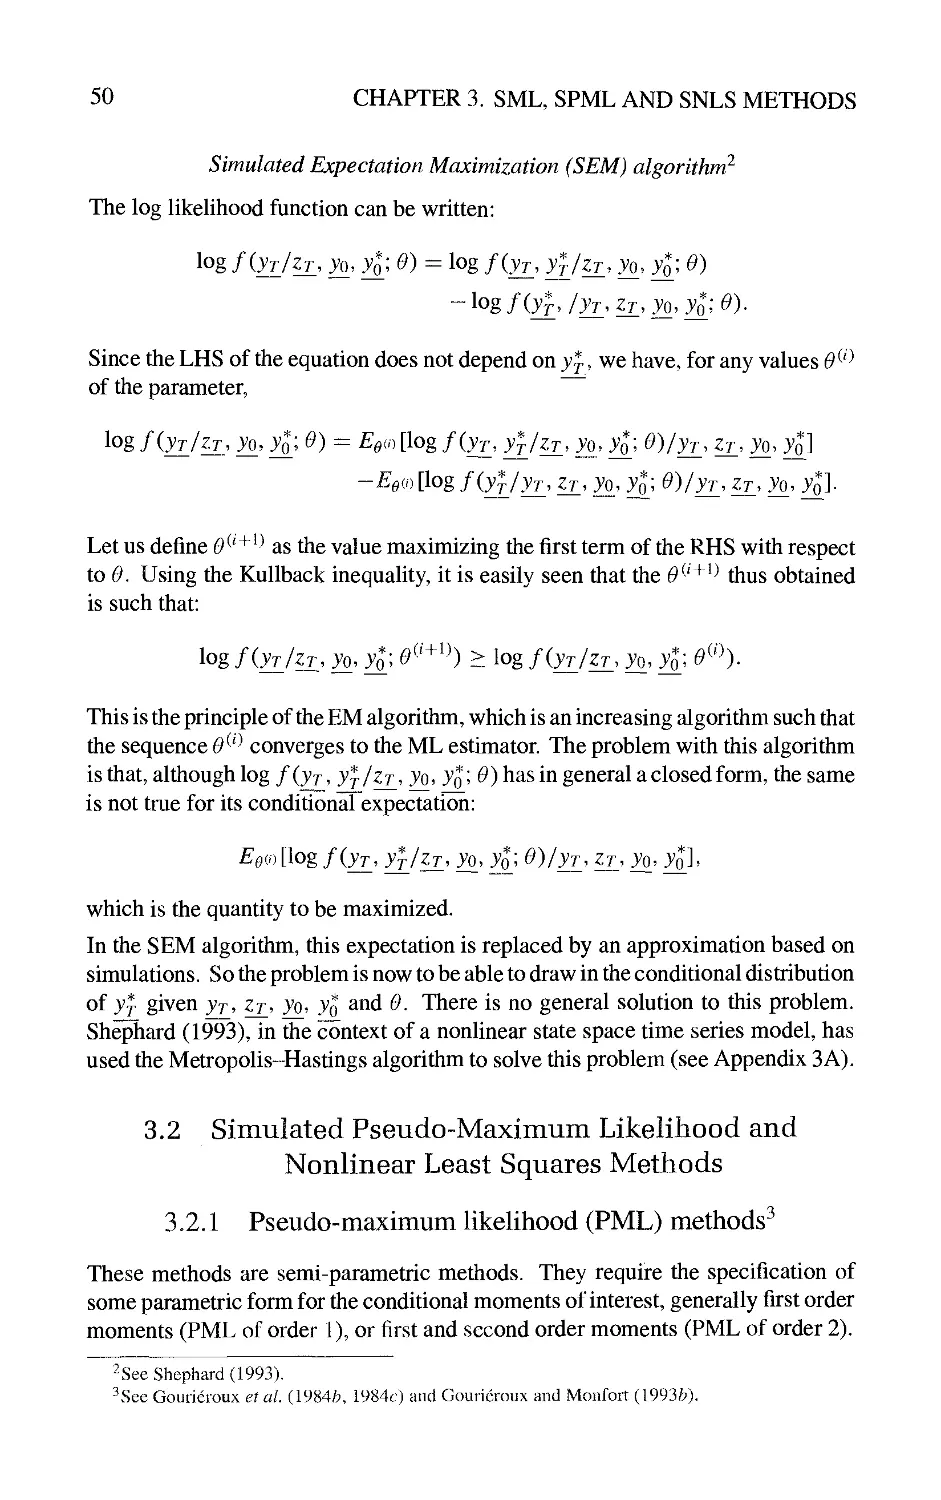 3.2 Simulated Pseudo-Maximum Likelihood and Nonlinear Least Squares Methods